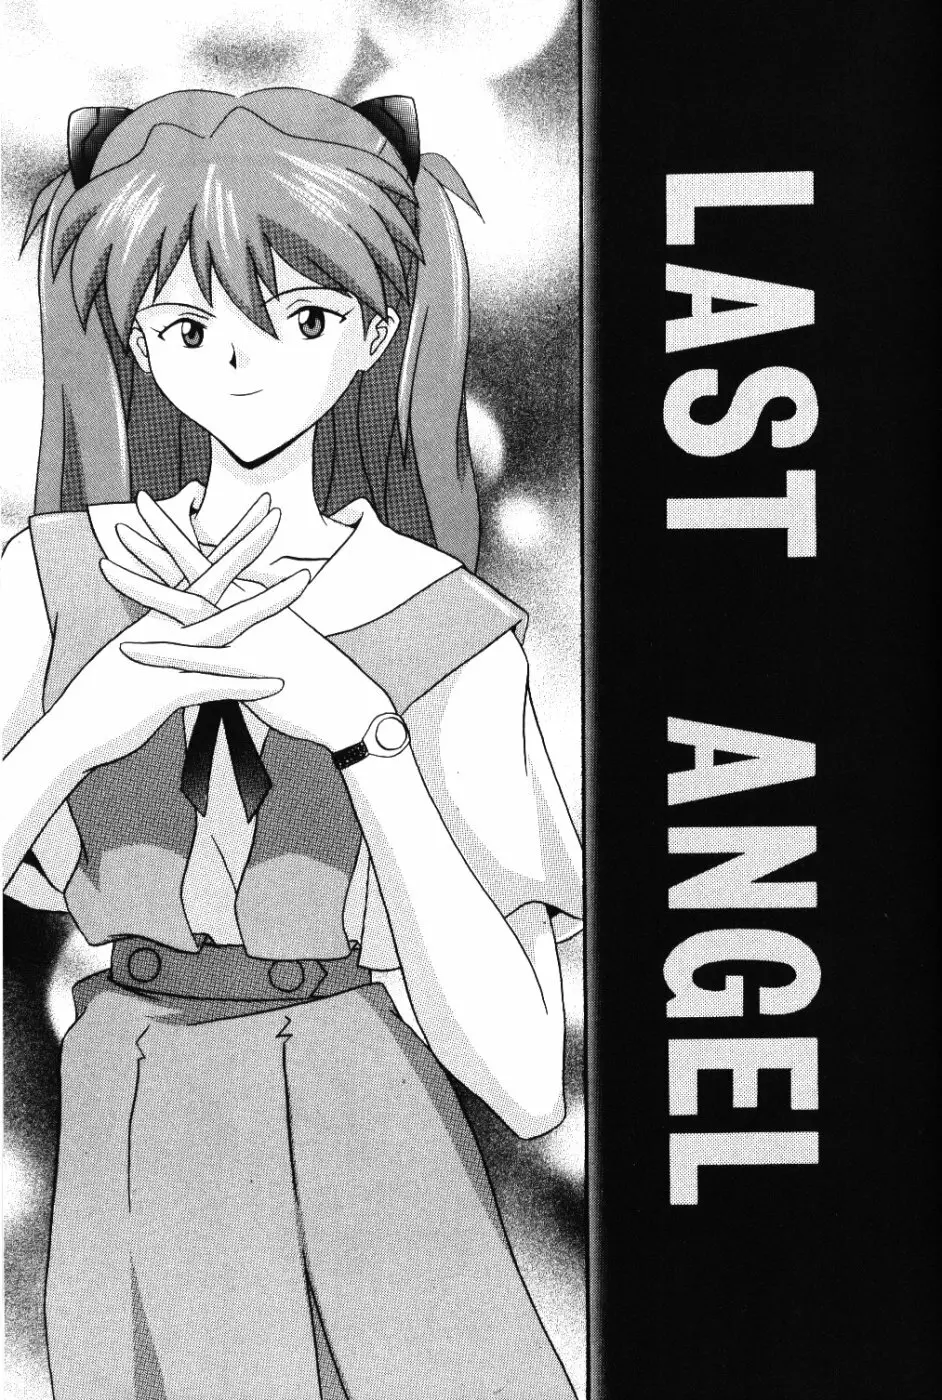 LAST ANGEL - page2